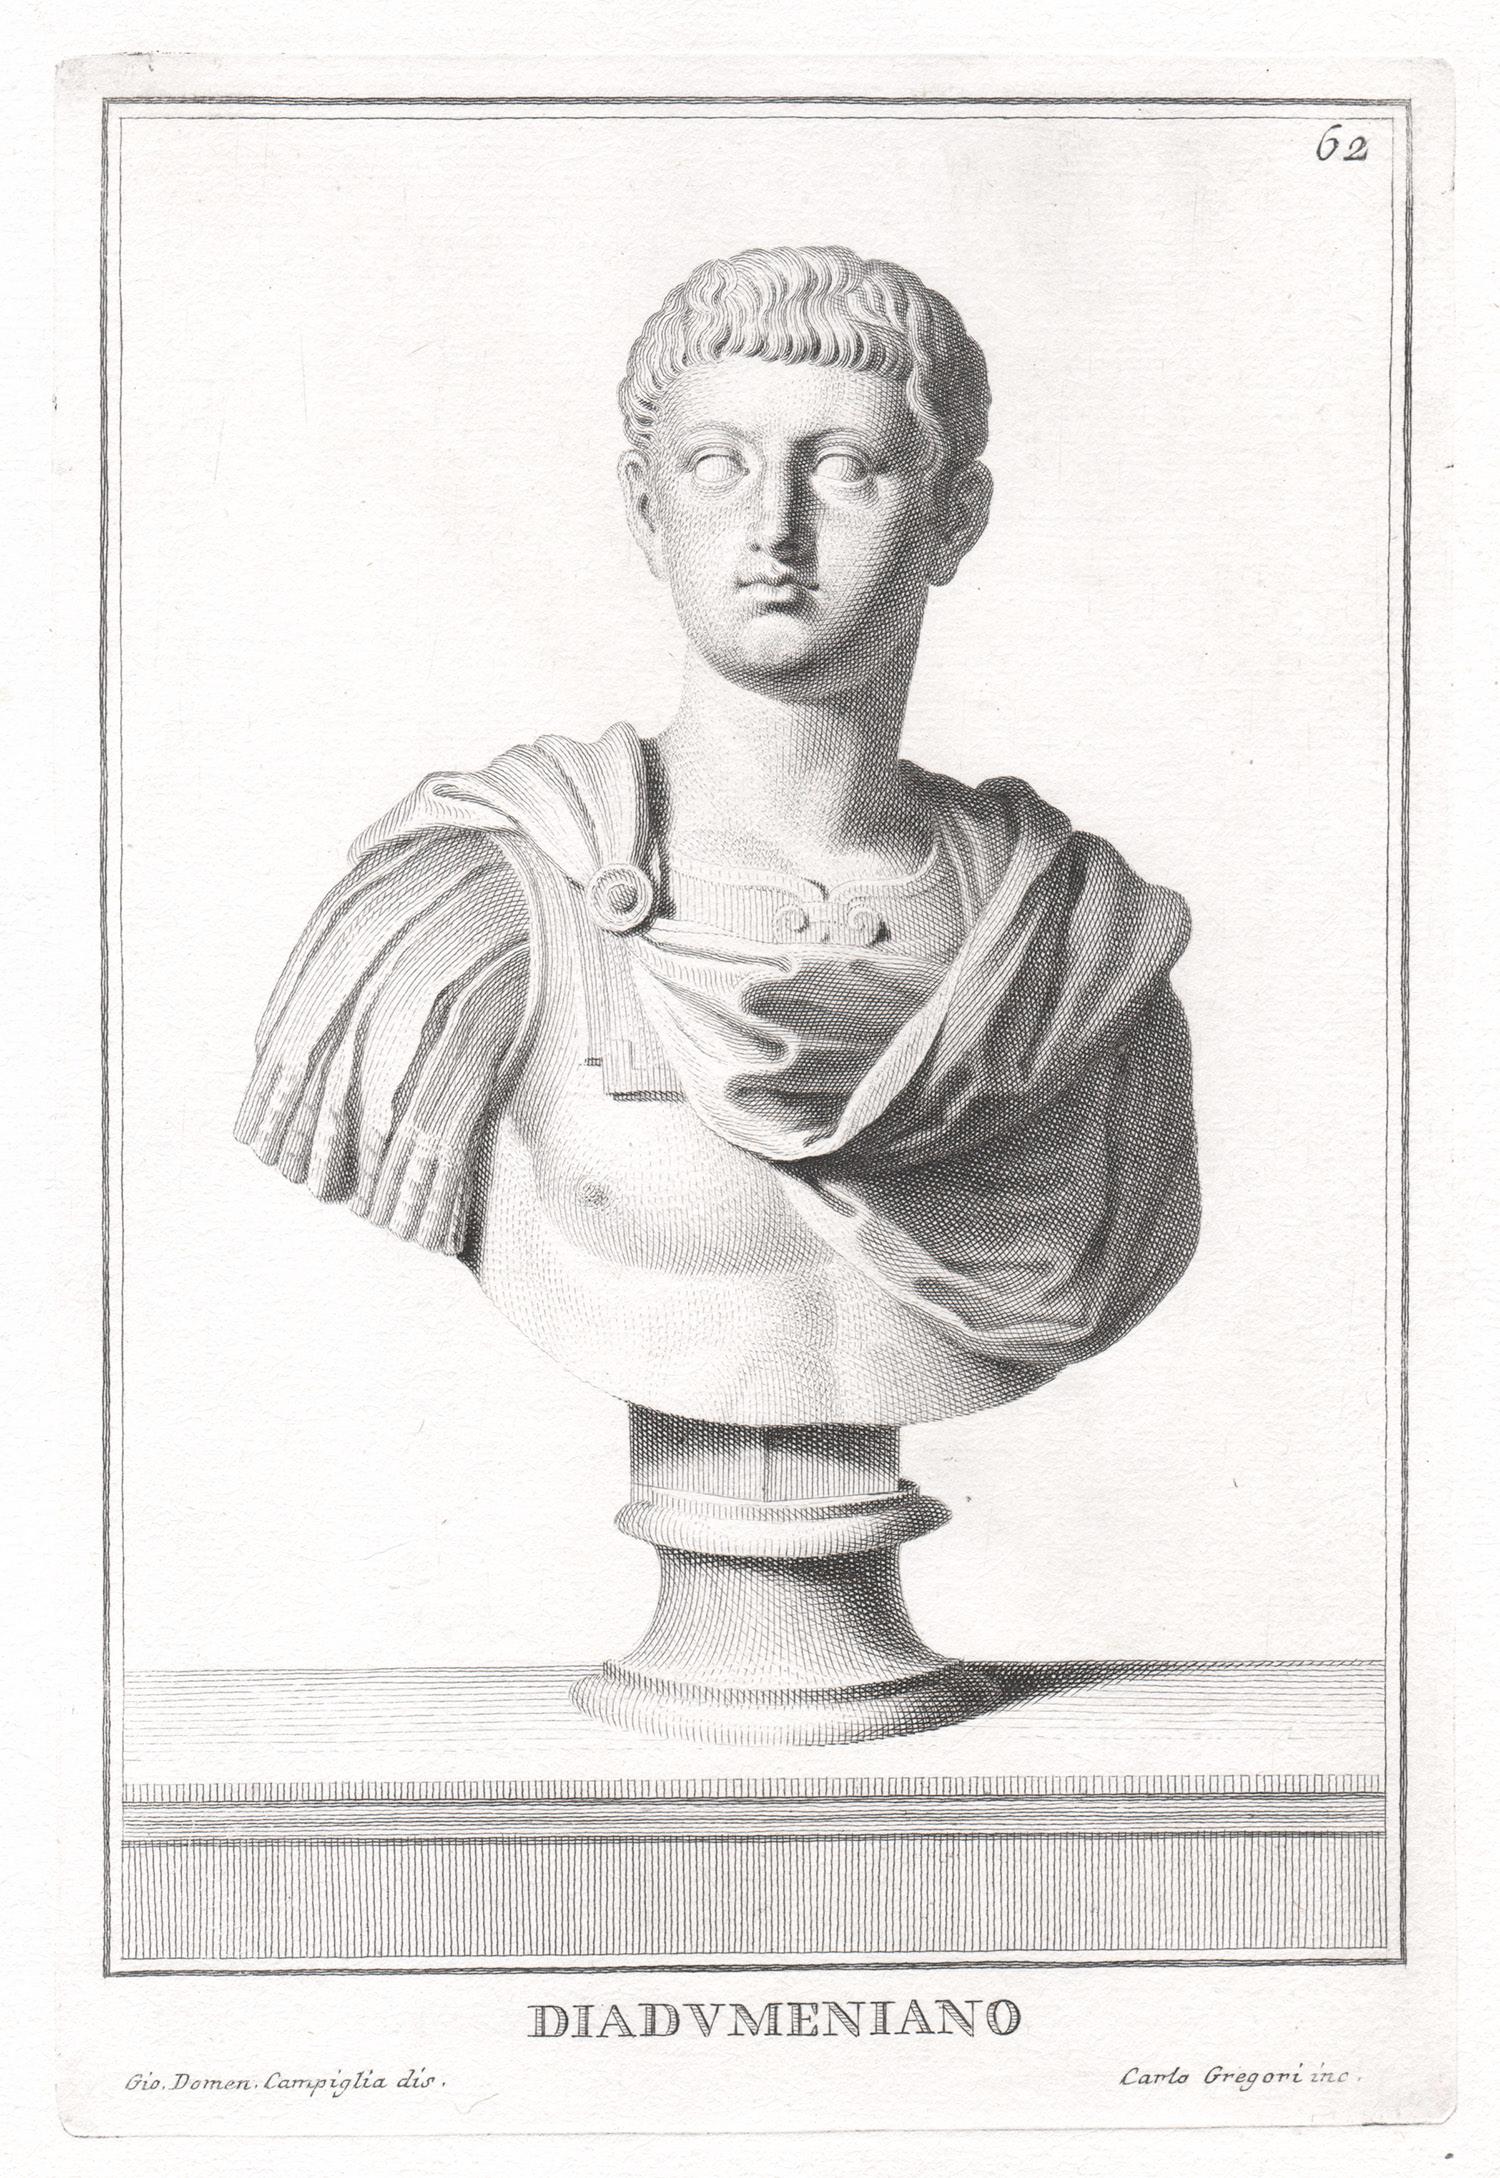 Carlo Gregori after Giovanni Domenico Campiglia Print - Diadumeniano, Roman sculpture bust C18th Grand Tour engraving, c1750